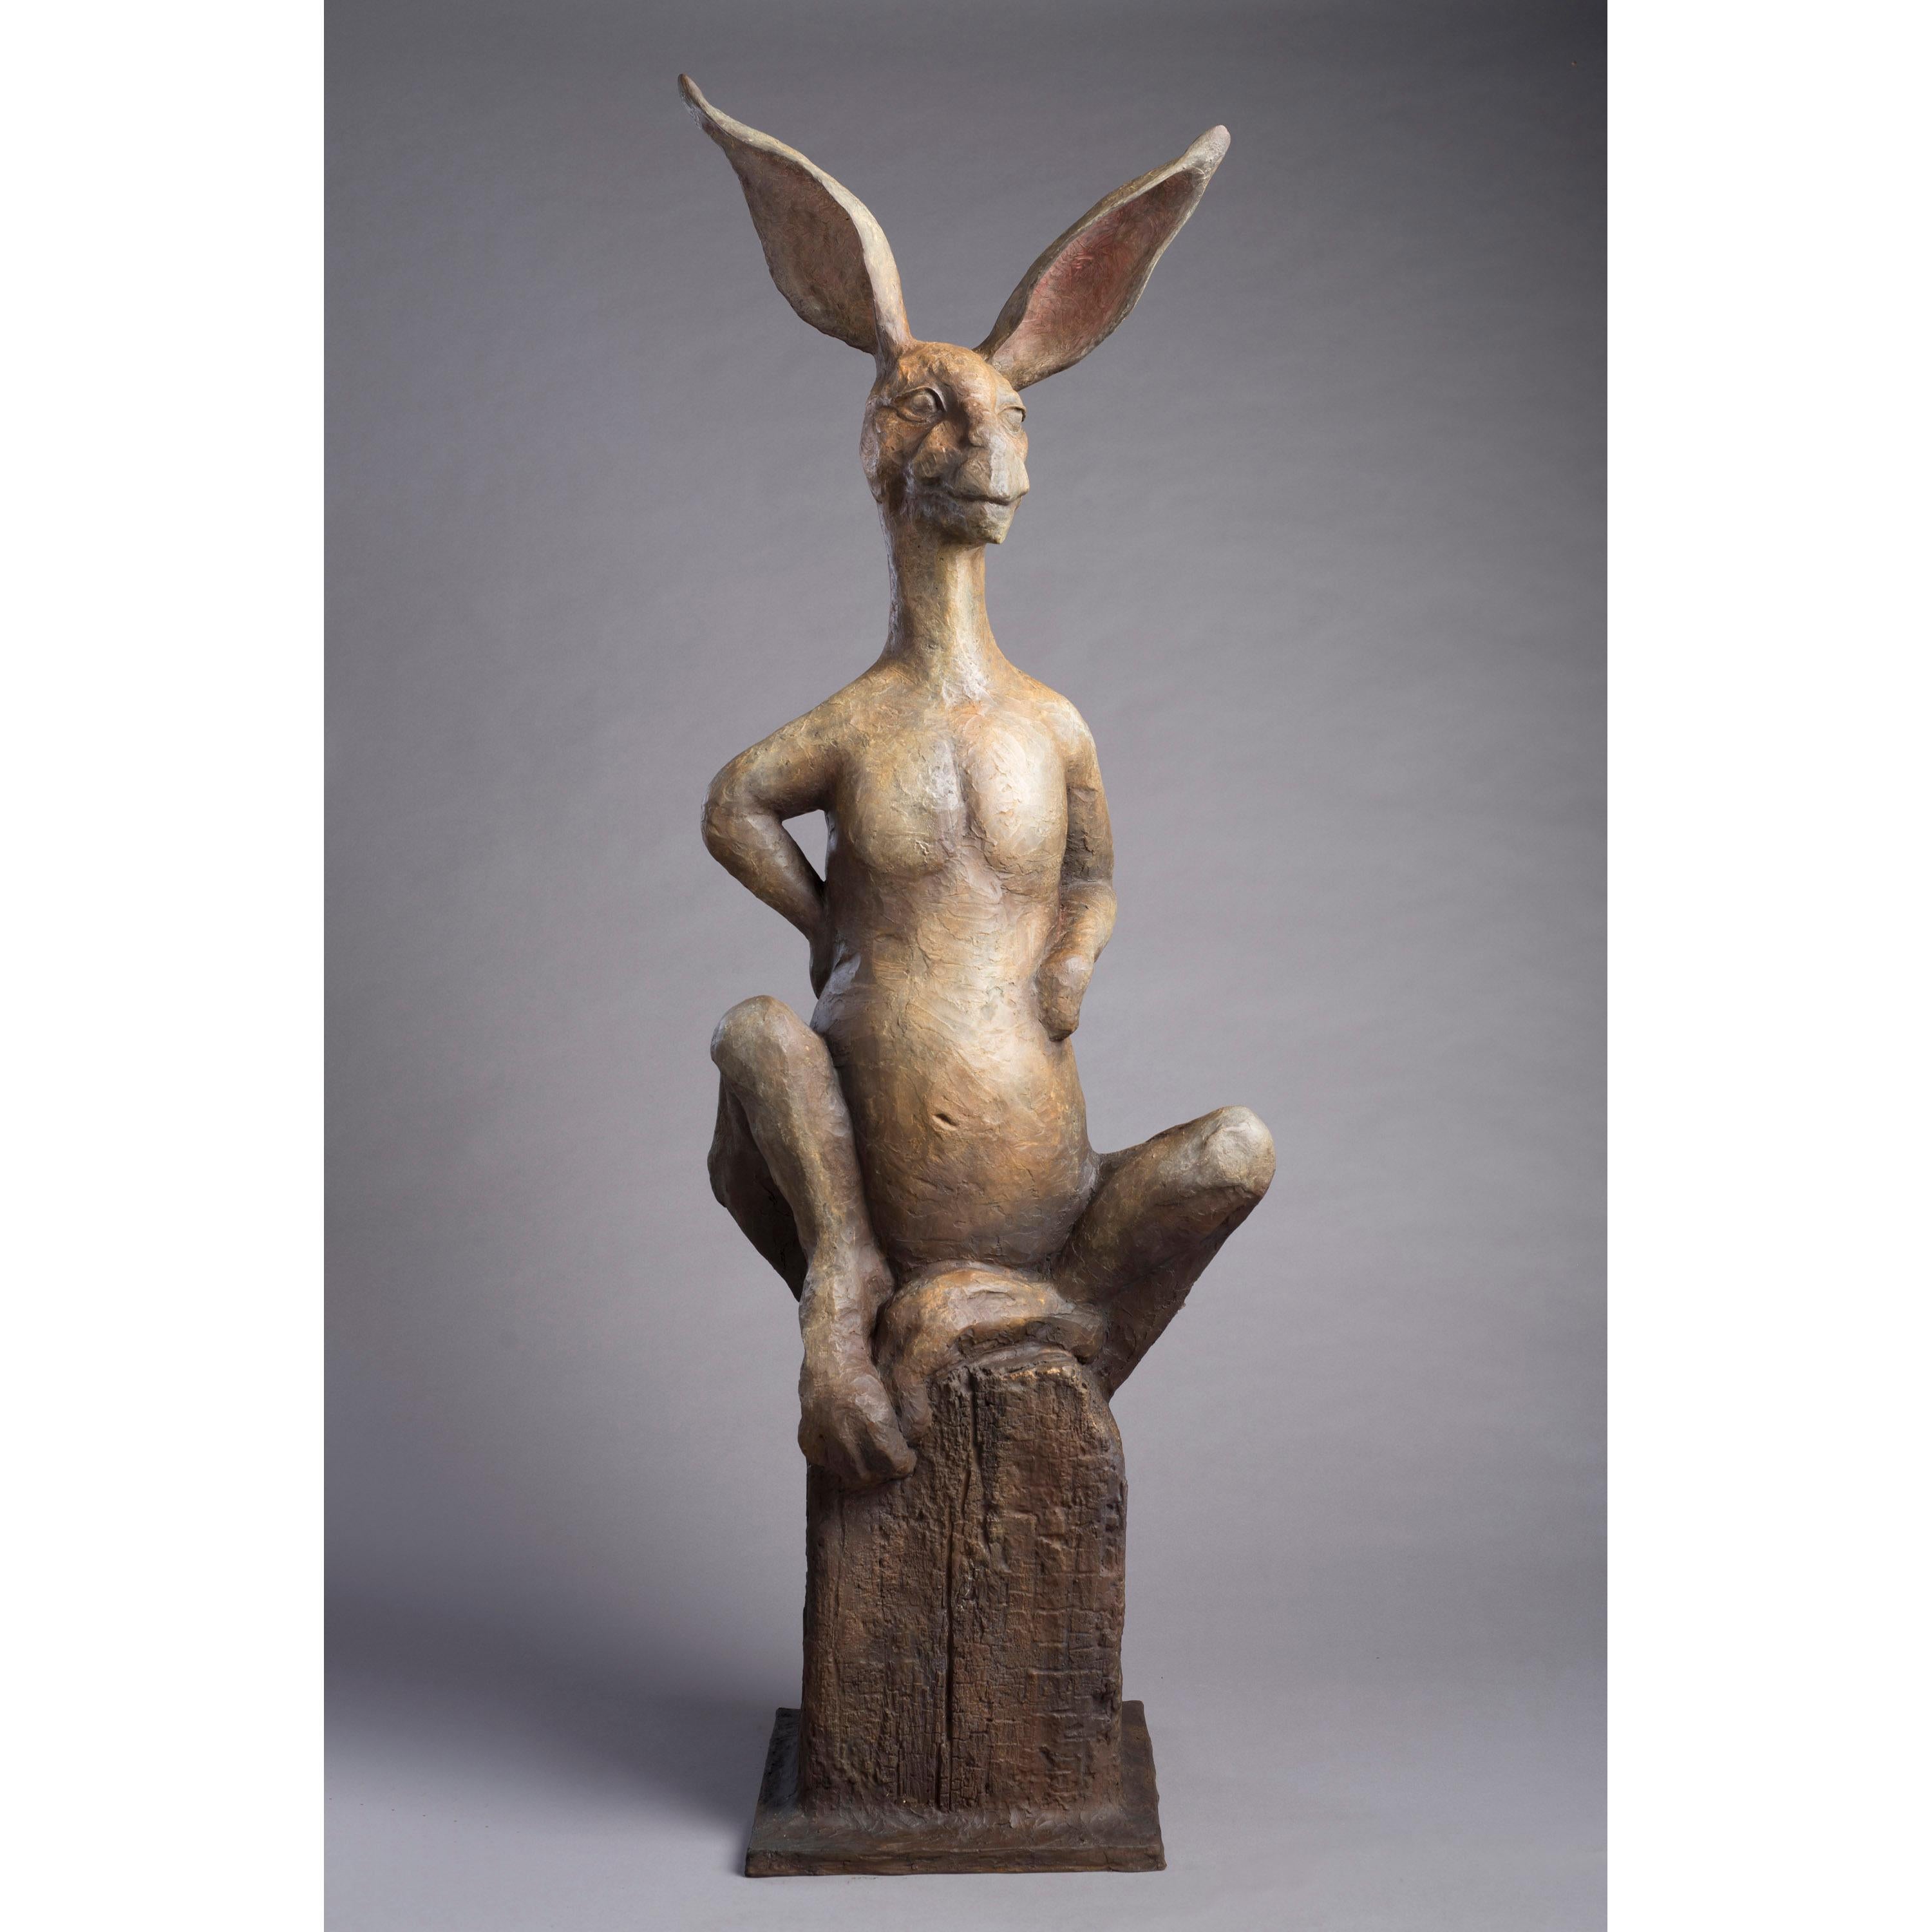 Giuseppe Palumbo Figurative Sculpture - More Hare 5/75